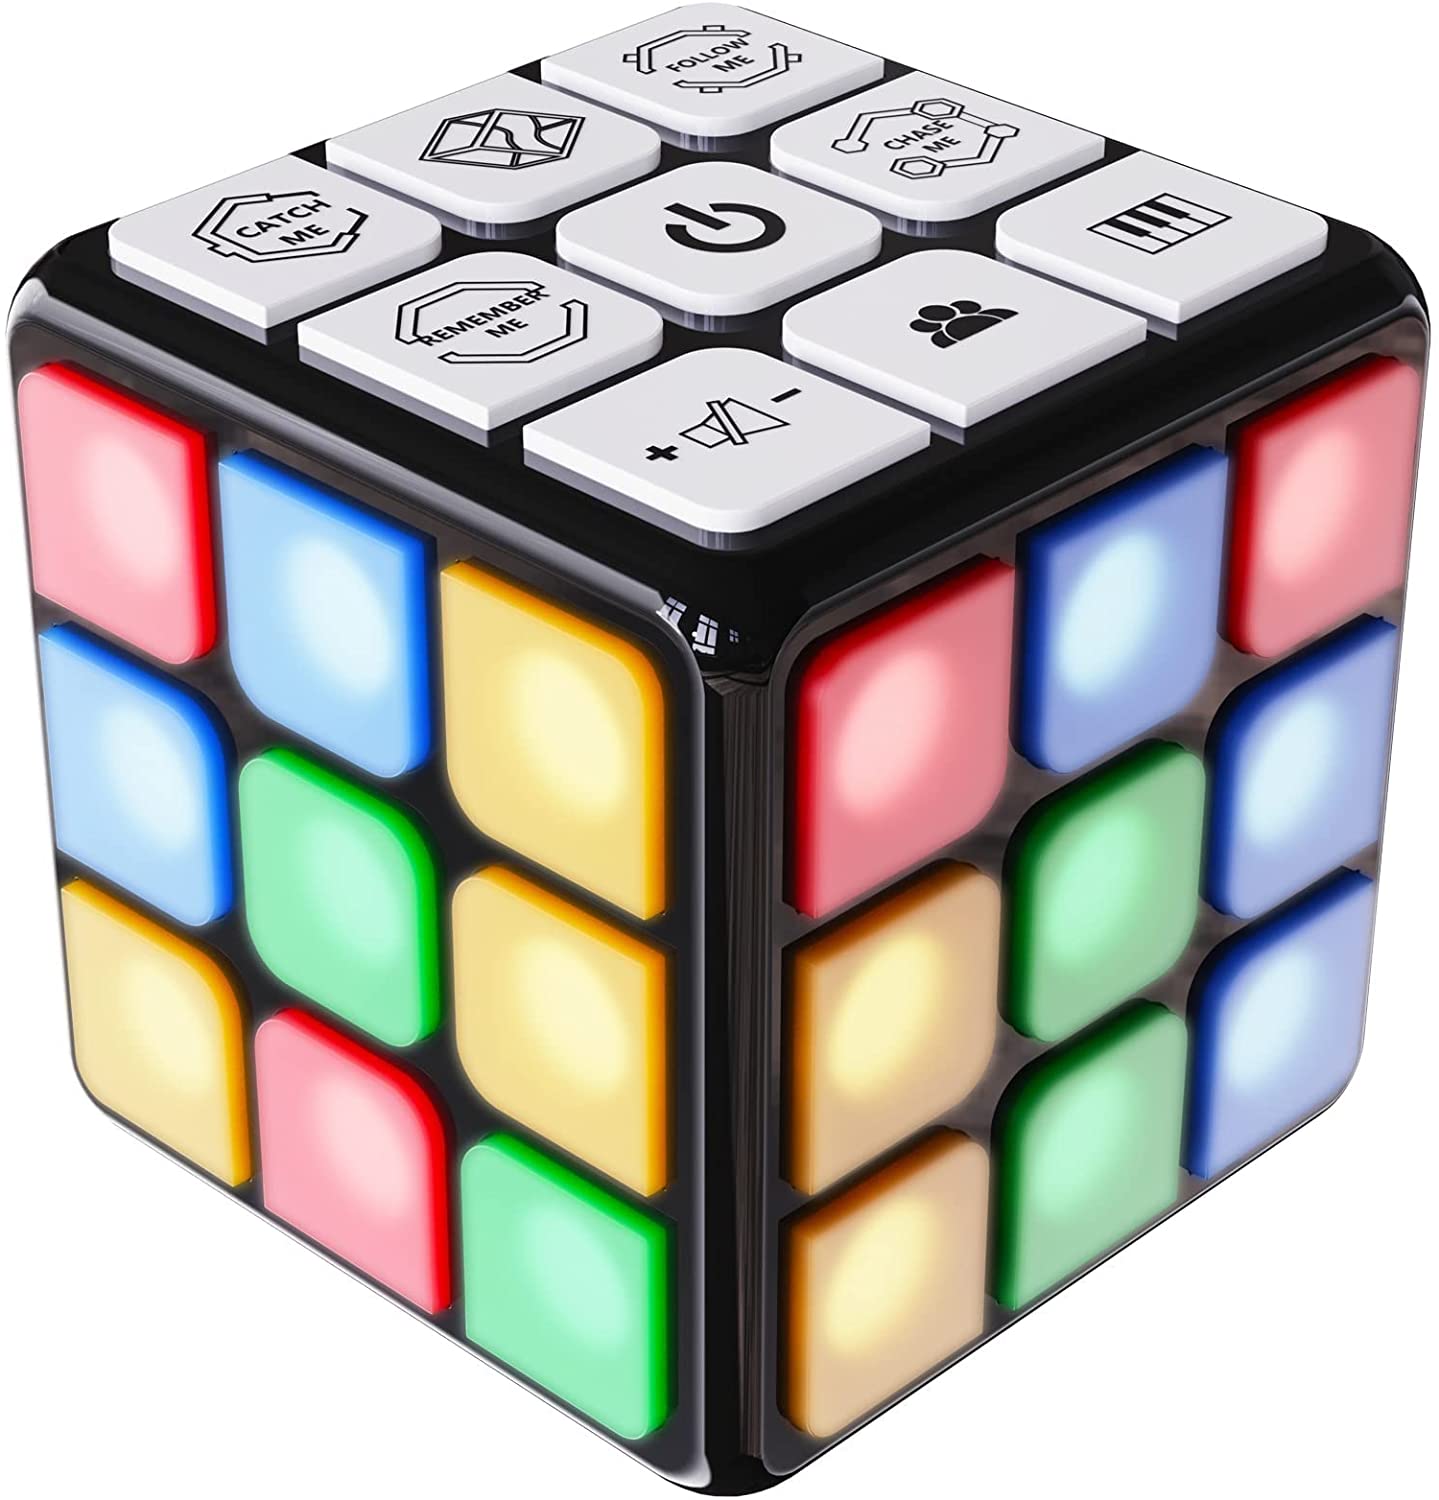 Flashing Cube Electronic Memory & Brain Game4-in-1 Handheld Game for KidsS 